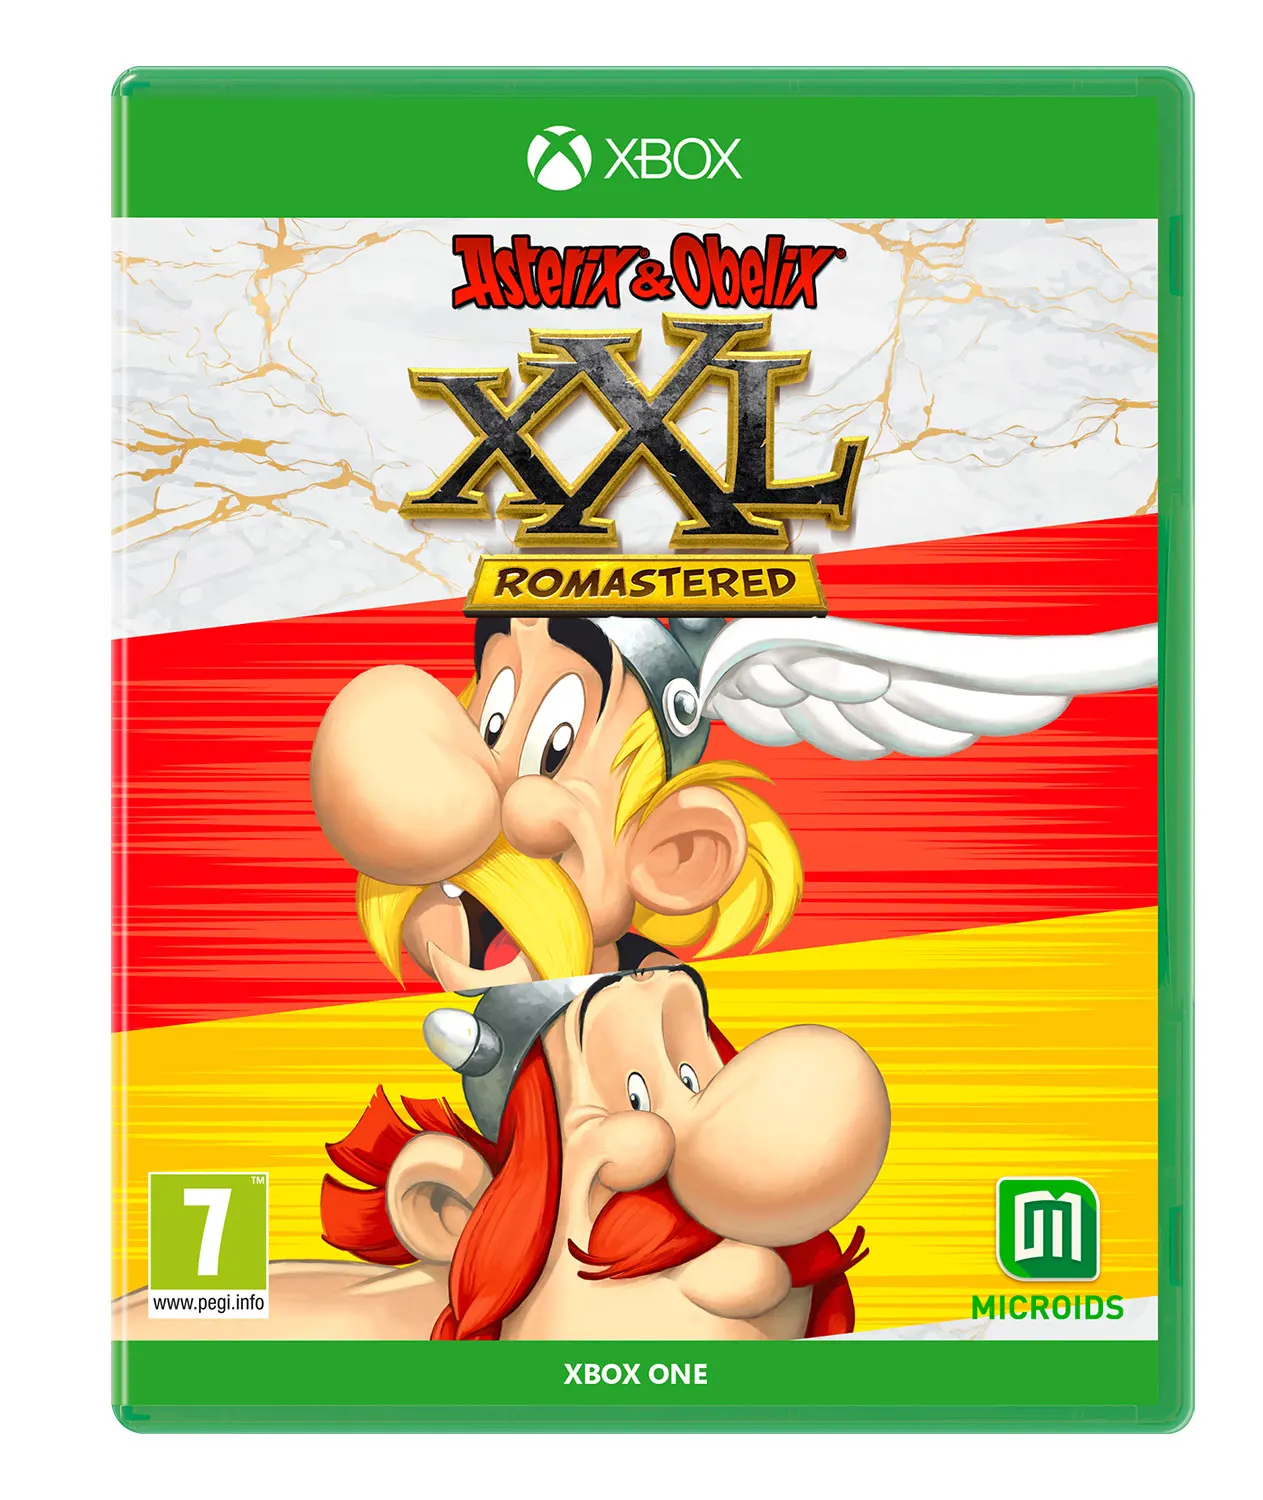 harmonisk Triumferende Mængde penge Asterix & Obelix XXL - Romastered - Xbox one